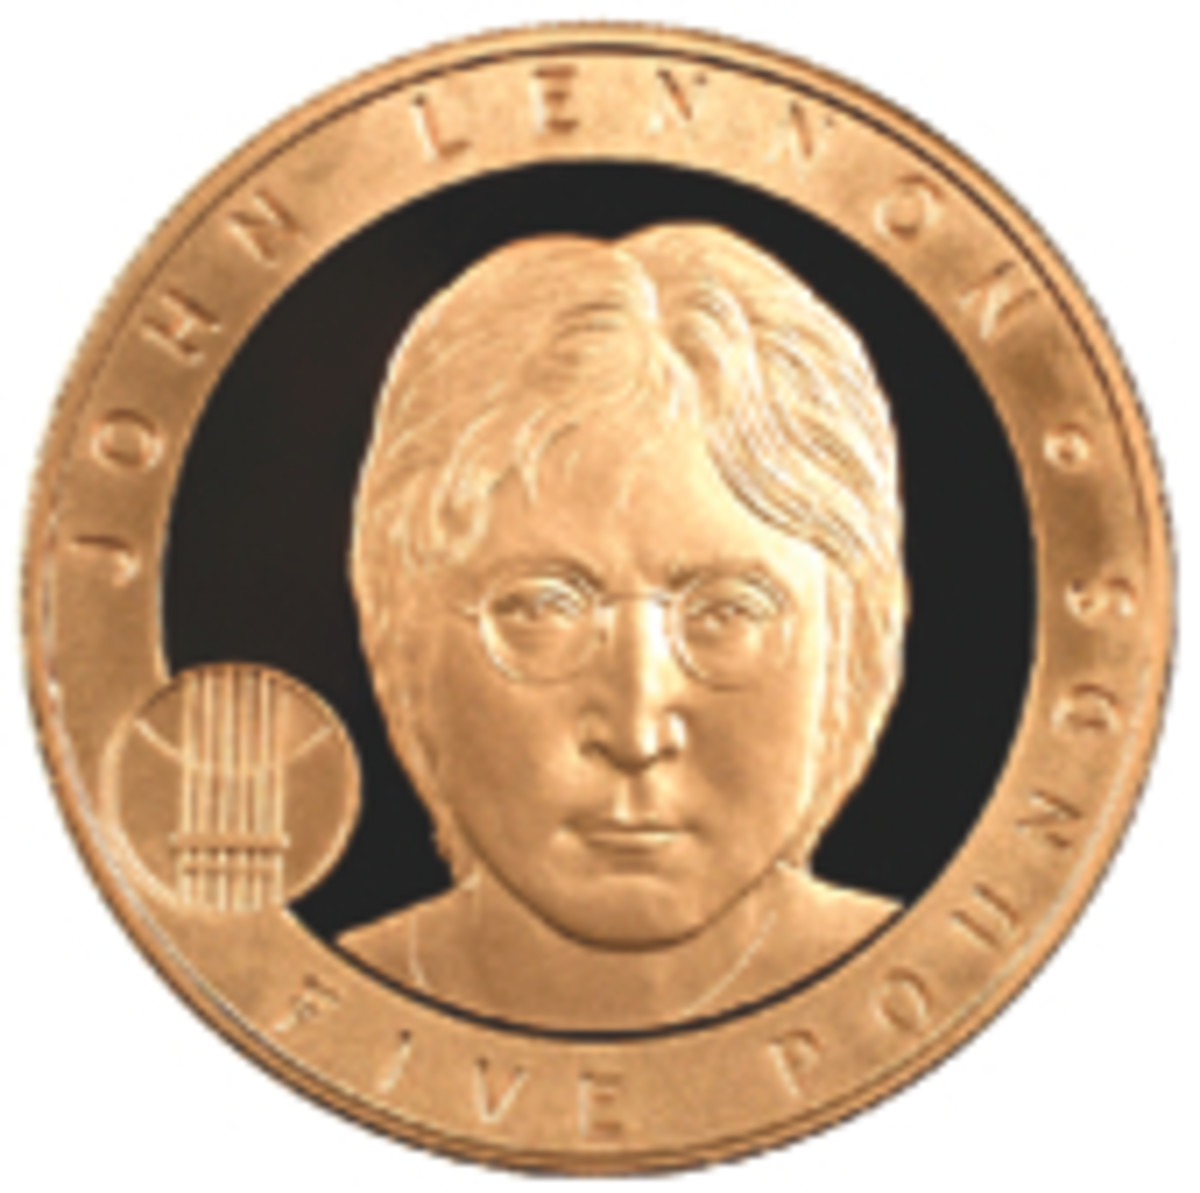 John Lennon Coin